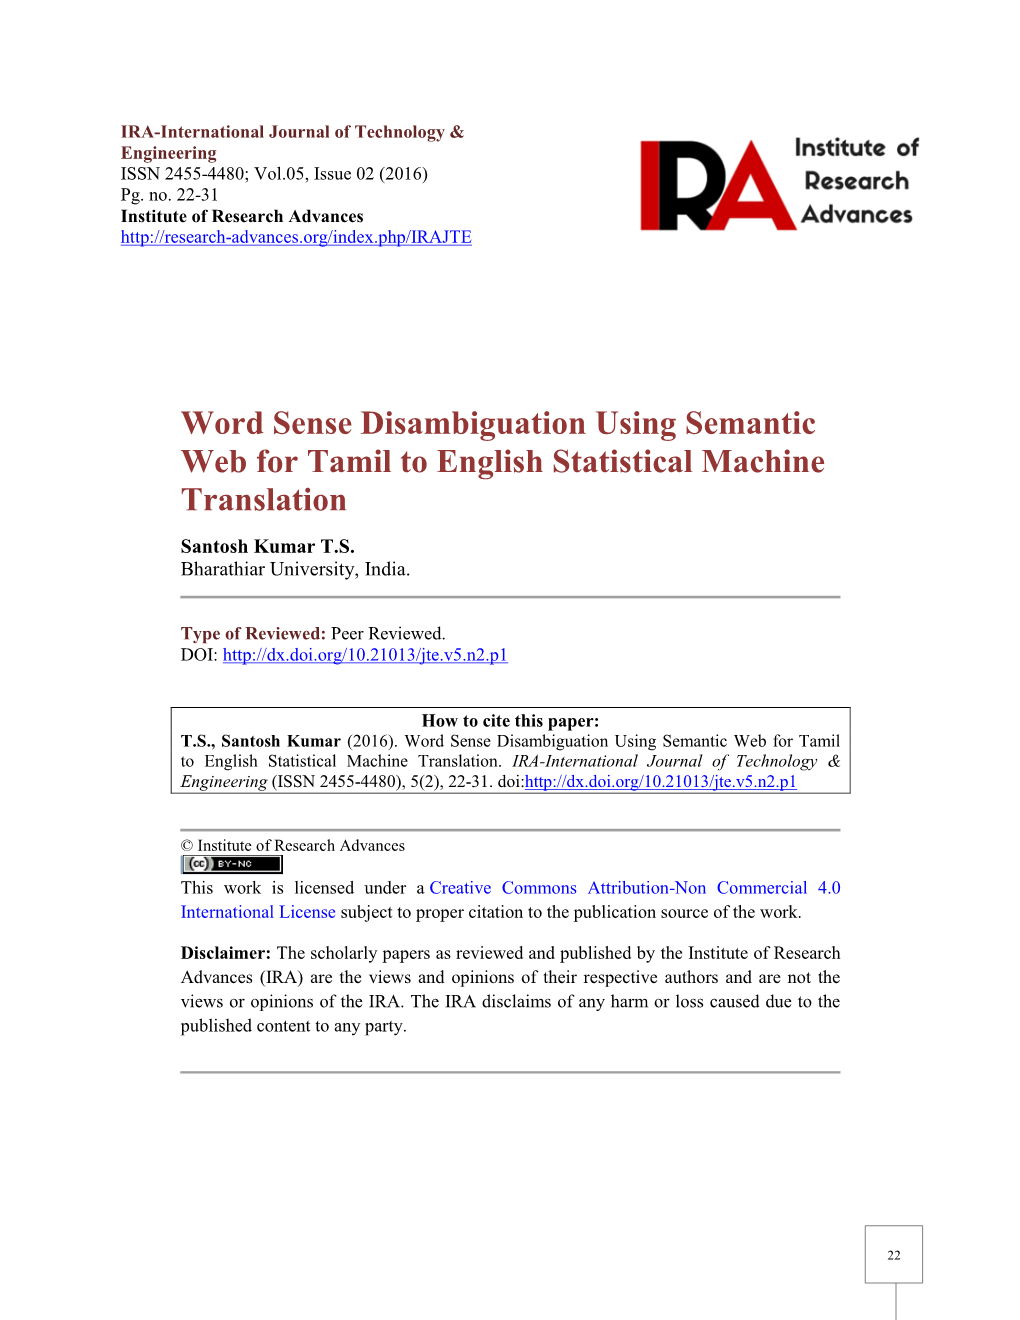 Word Sense Disambiguation Using Semantic Web for Tamil to English Statistical Machine Translation Santosh Kumar T.S